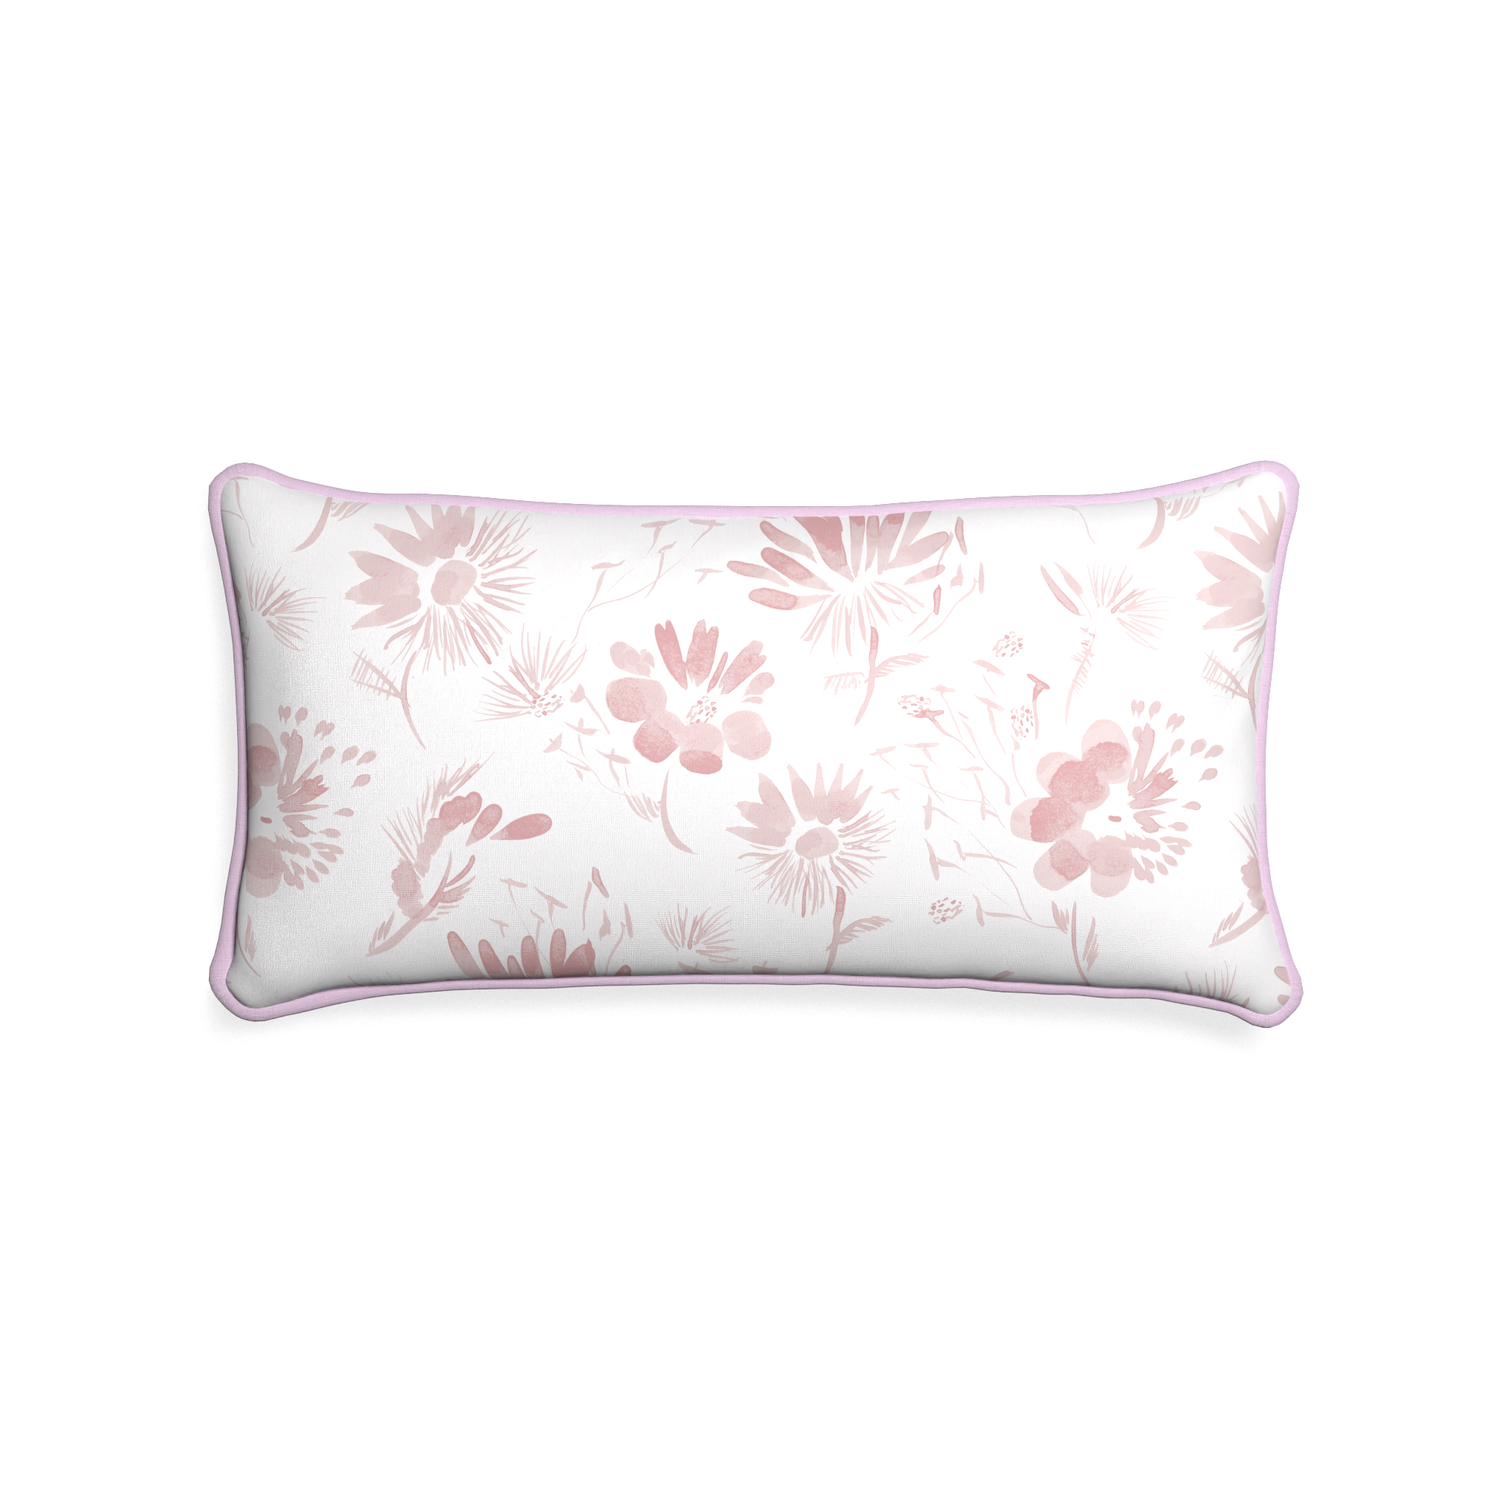 Midi-lumbar blake custom pink floralpillow with l piping on white background